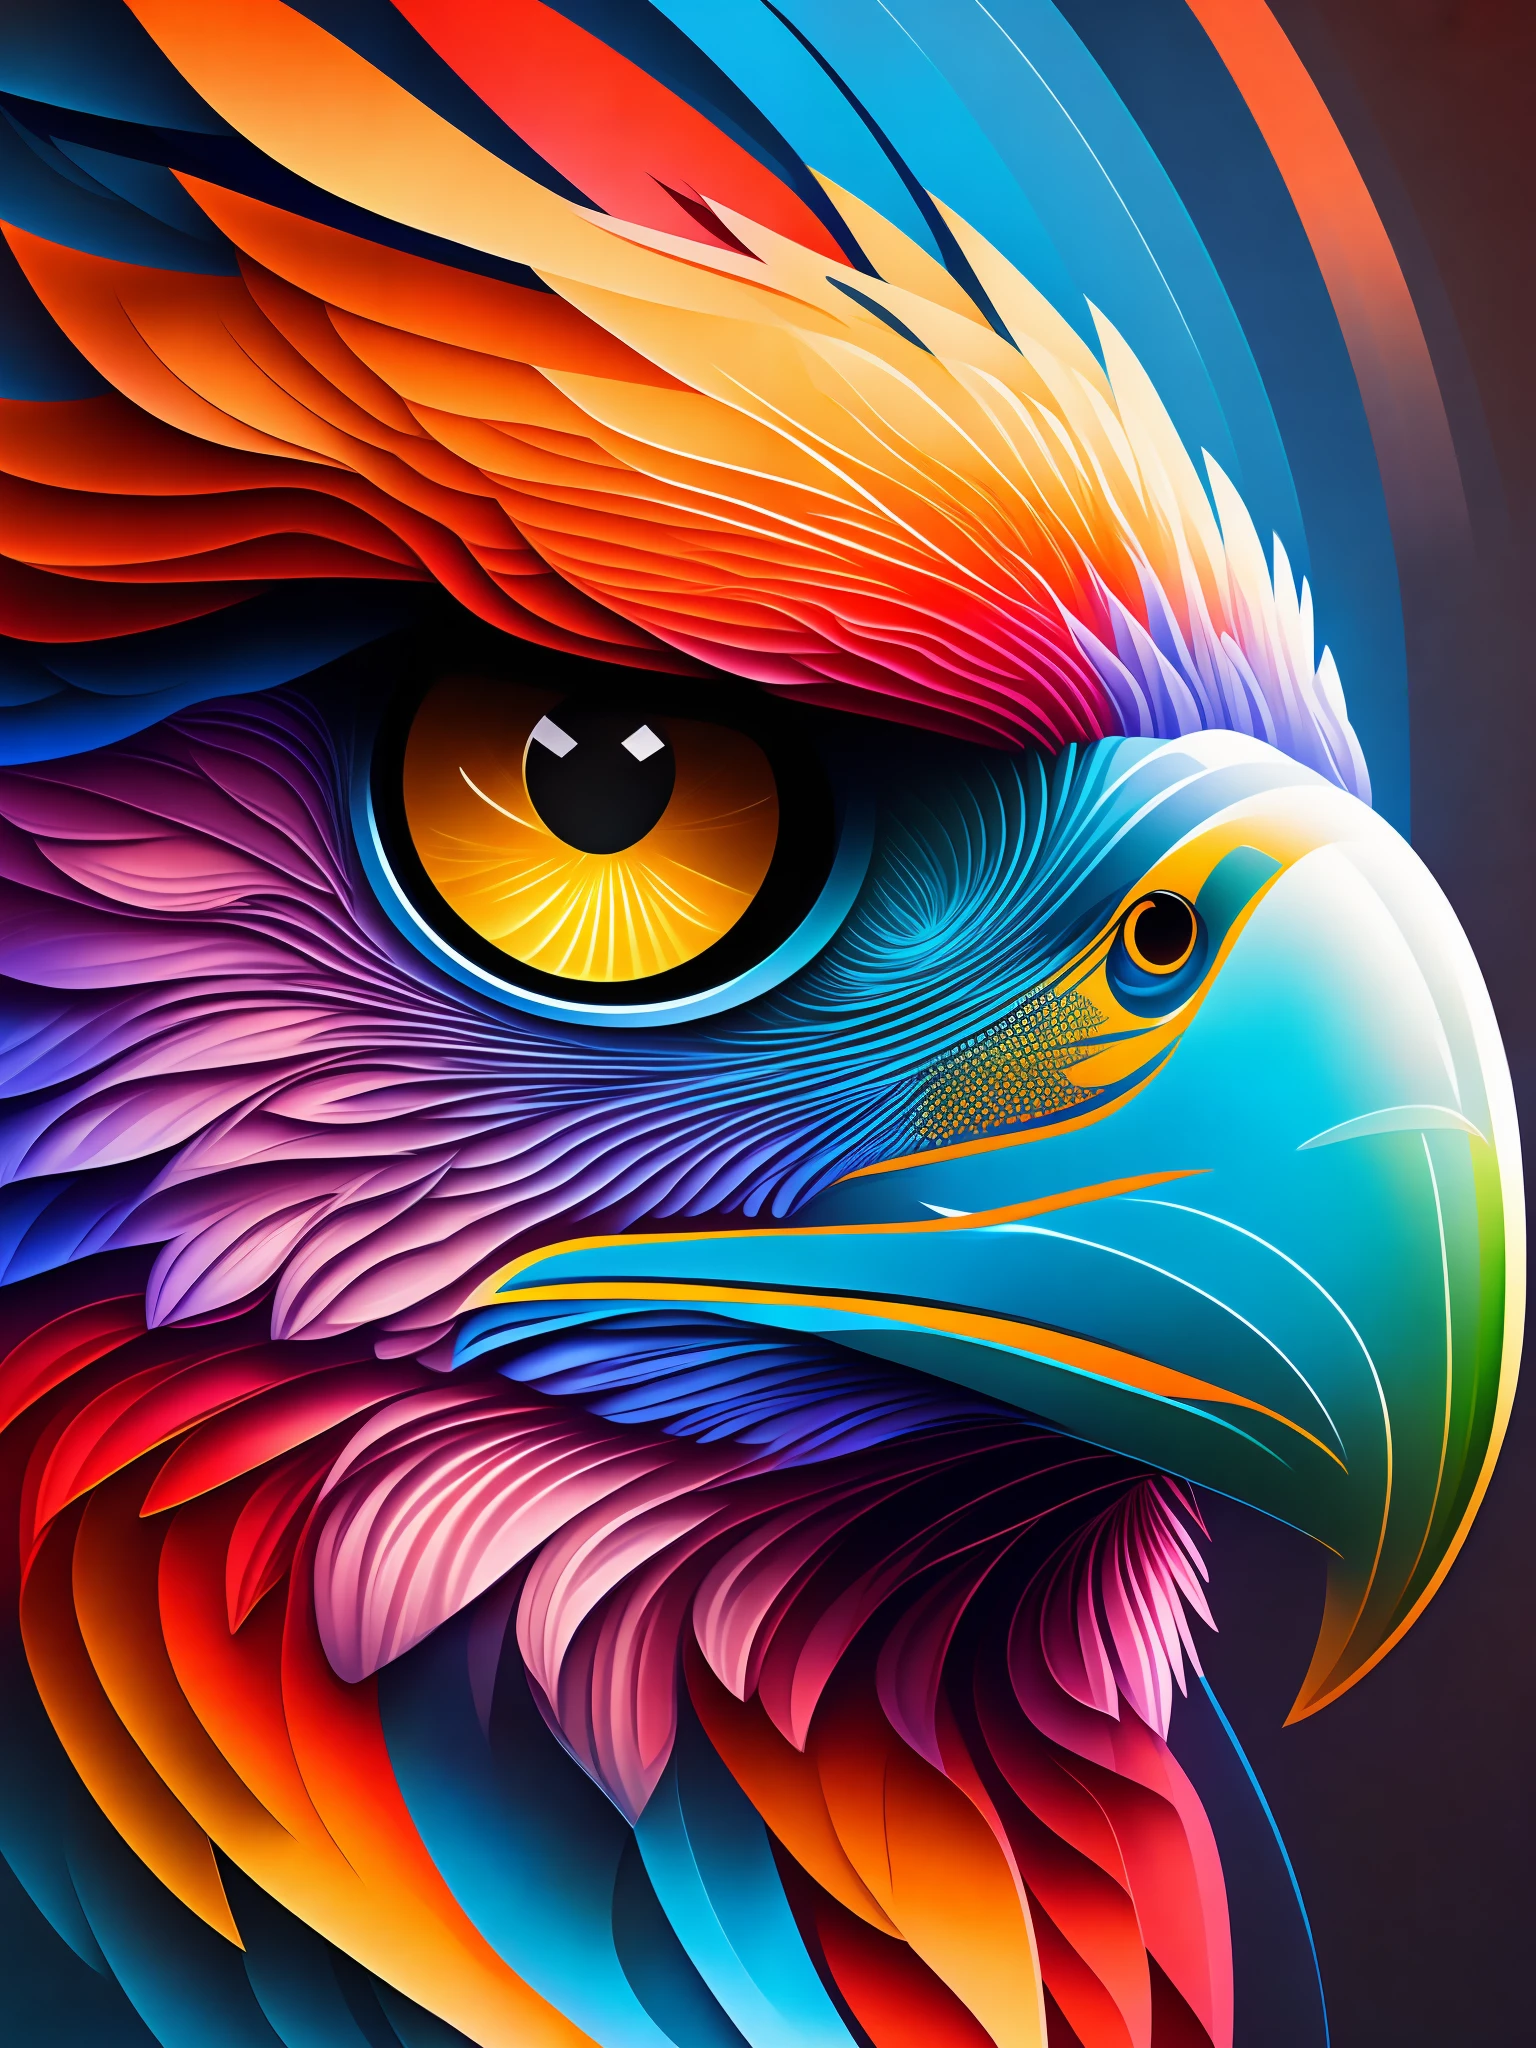 the красочный abstract of eagle eye, (красочный,высокая детализация,векторное искусство)